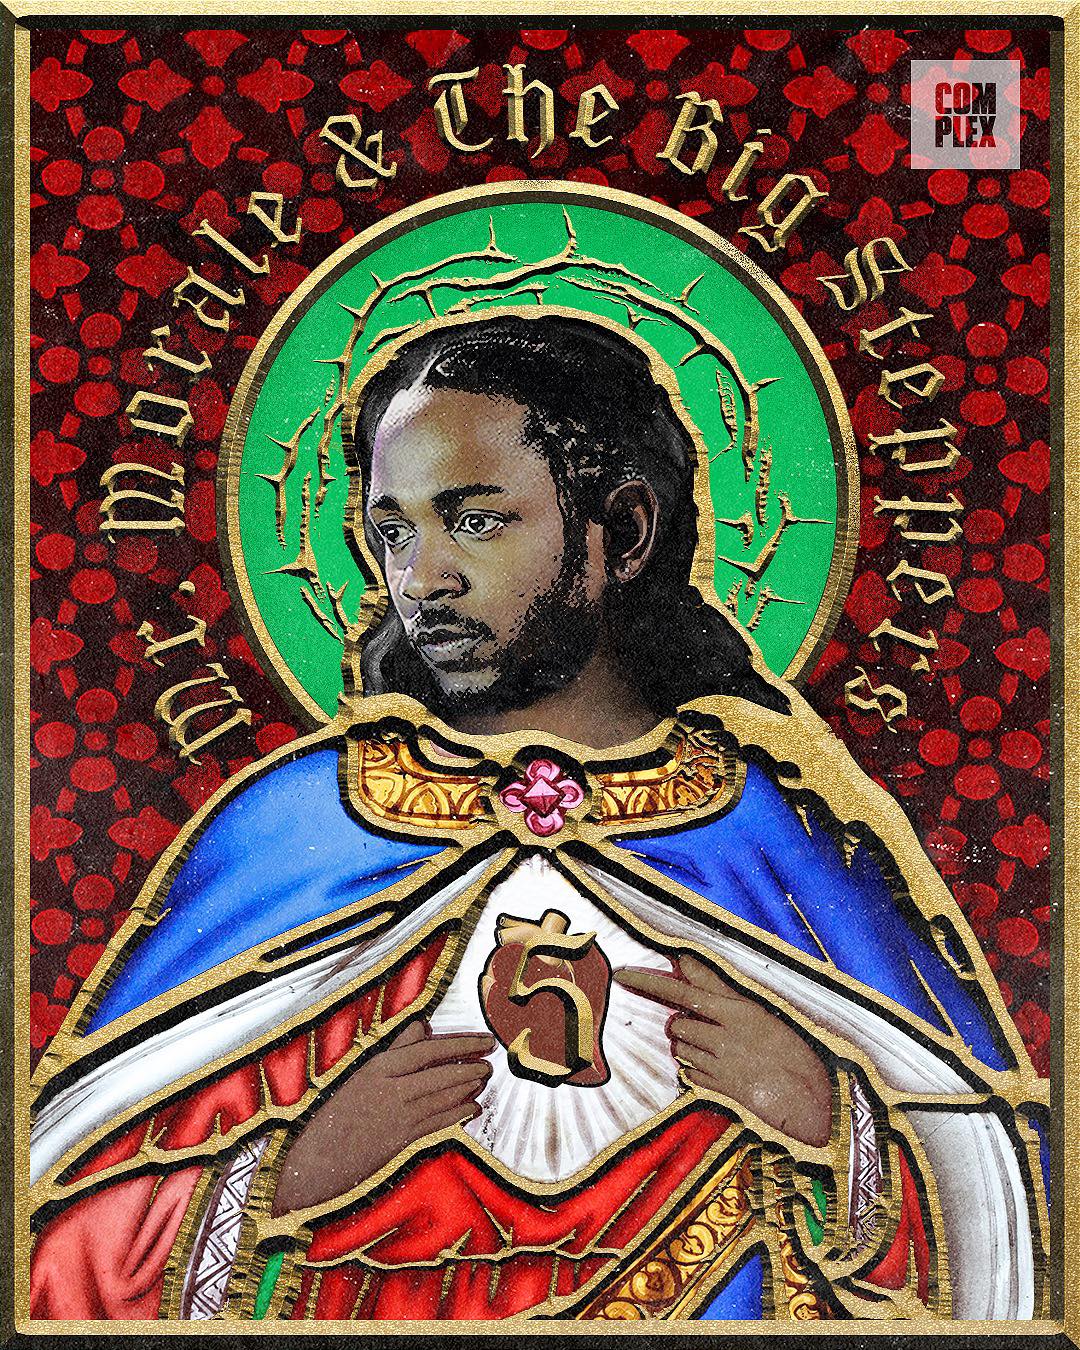 Kendrick Lamar 'Mr. Morale' (013), an art canvas by BEAM! - INPRNT